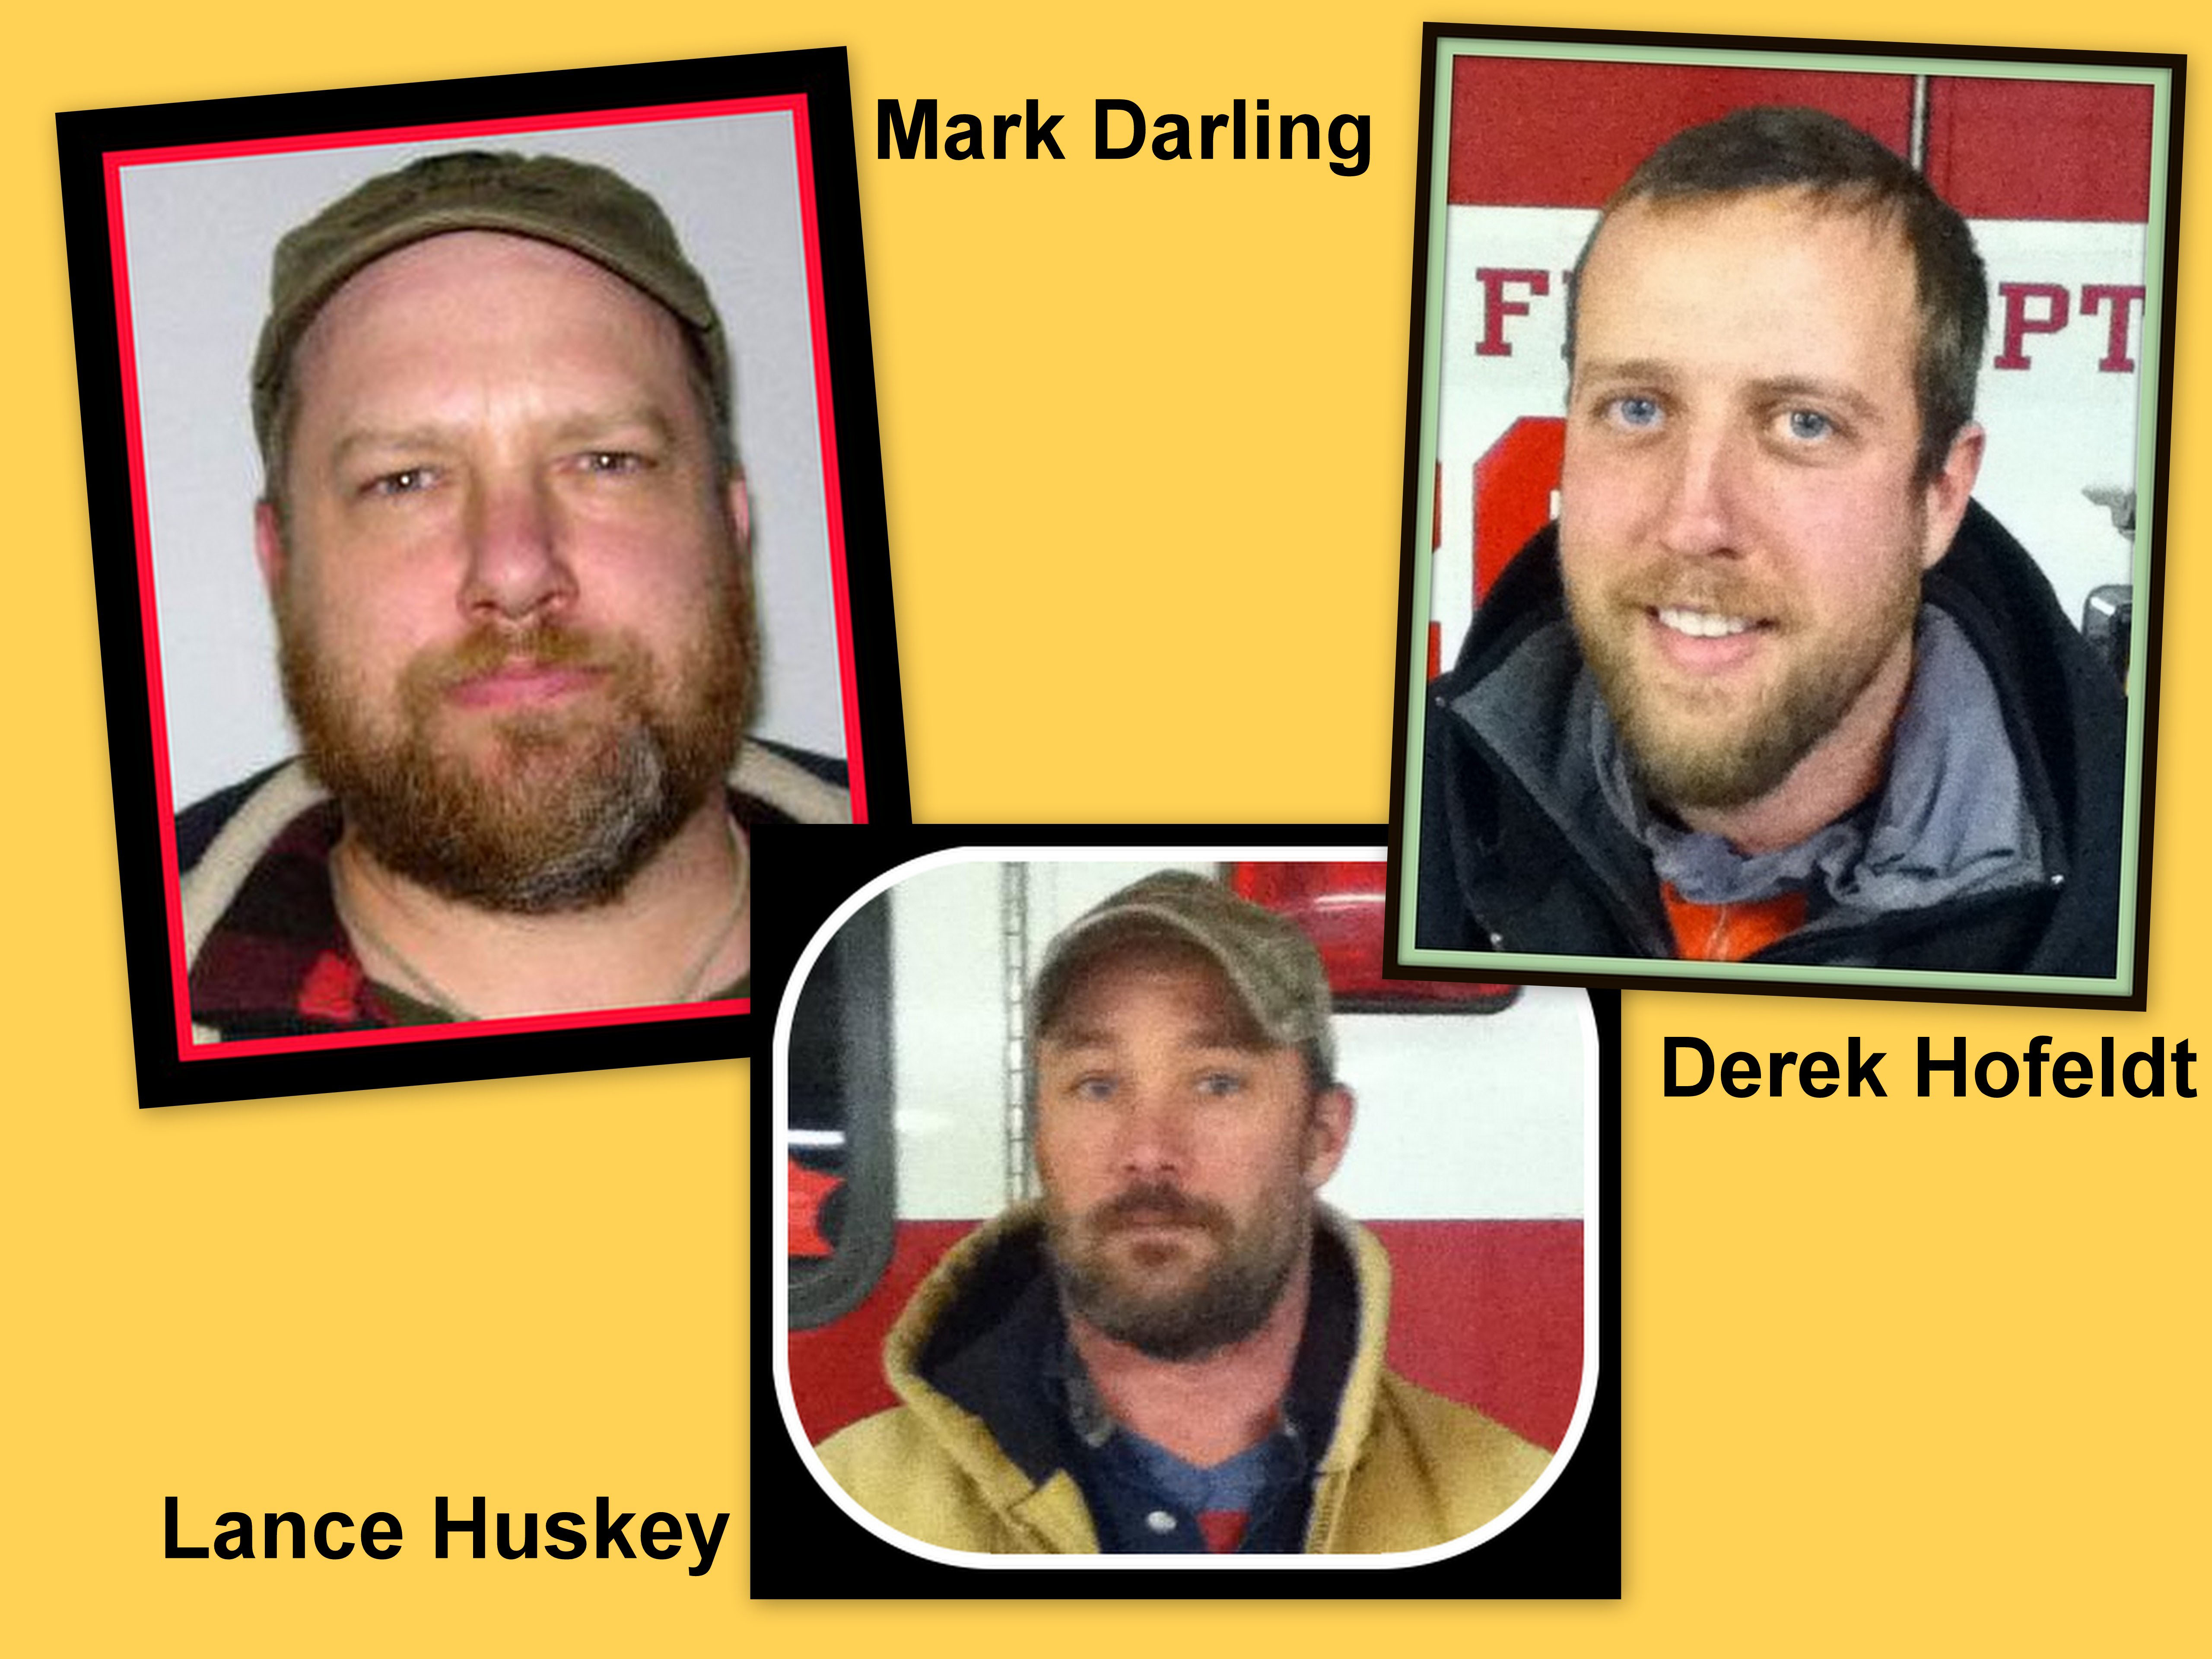 Mark Darling, Lance Huskey, and Derek Hofeldt